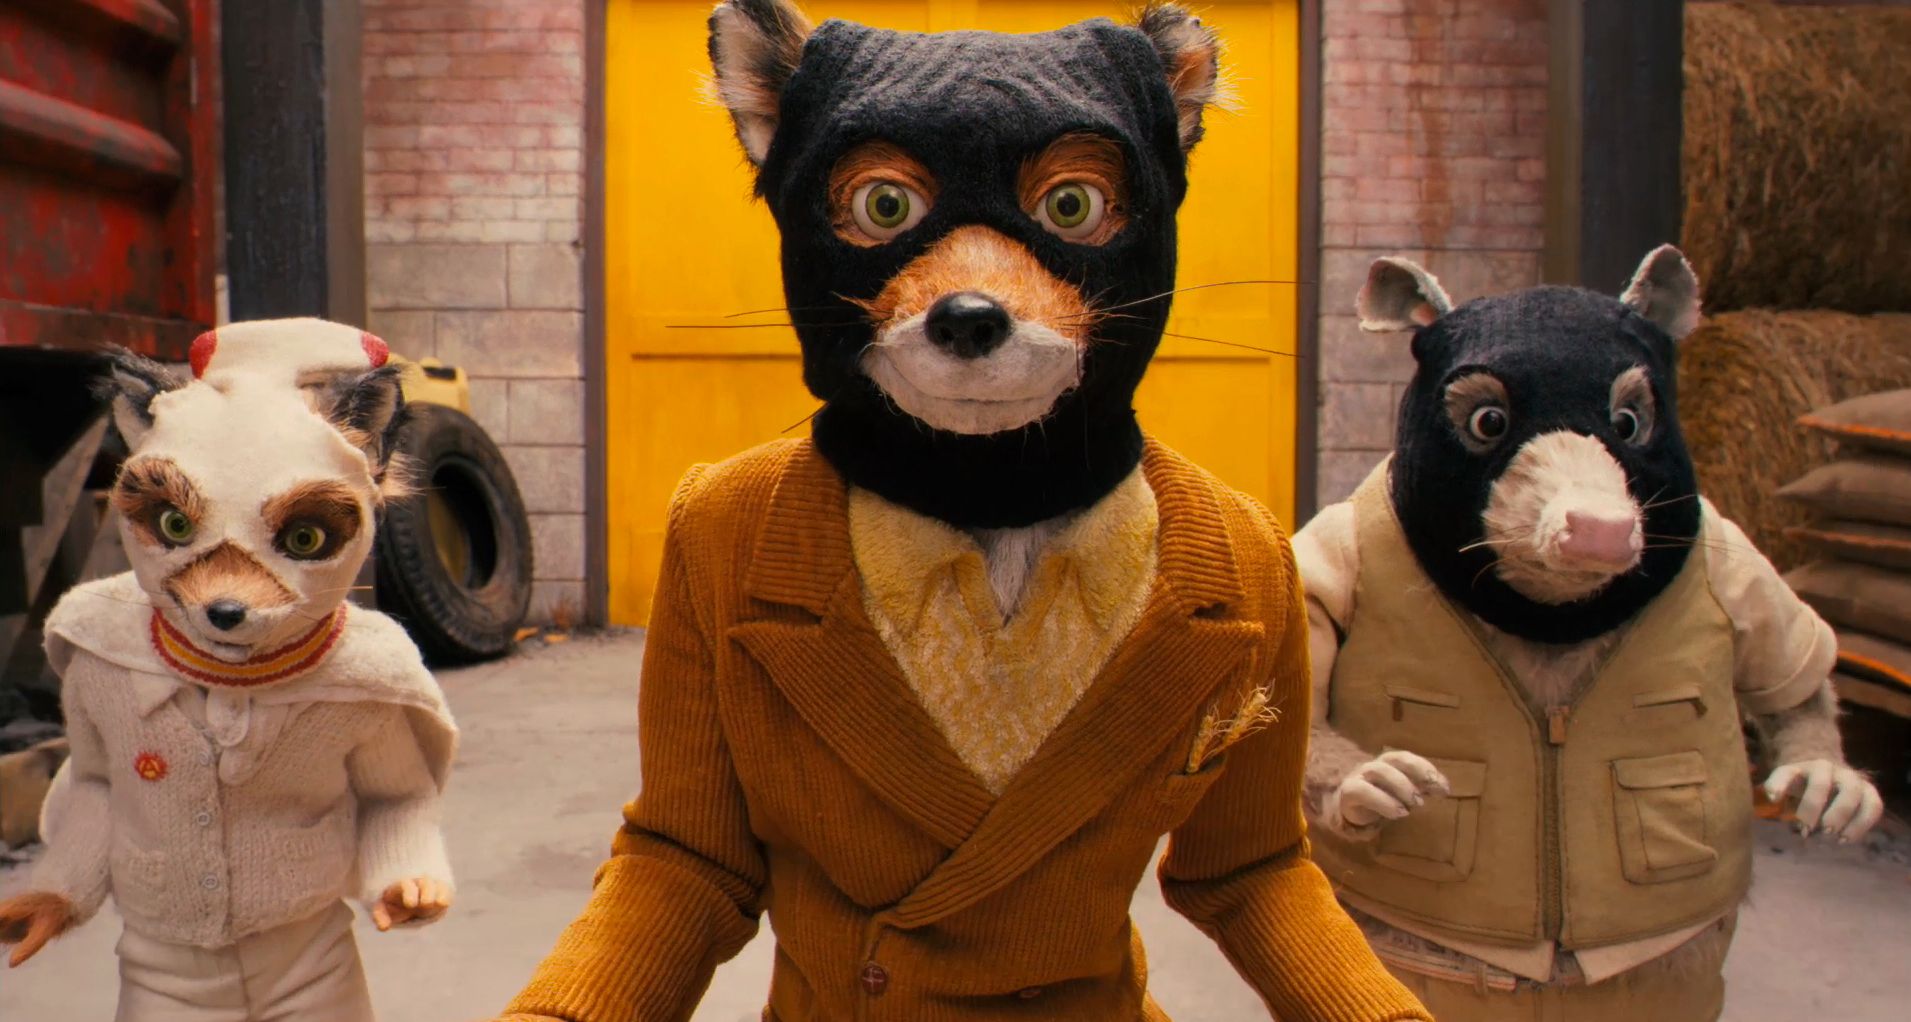 Fantastic Mr. Fox Theme Song. Movie Theme Songs & TV Soundtracks